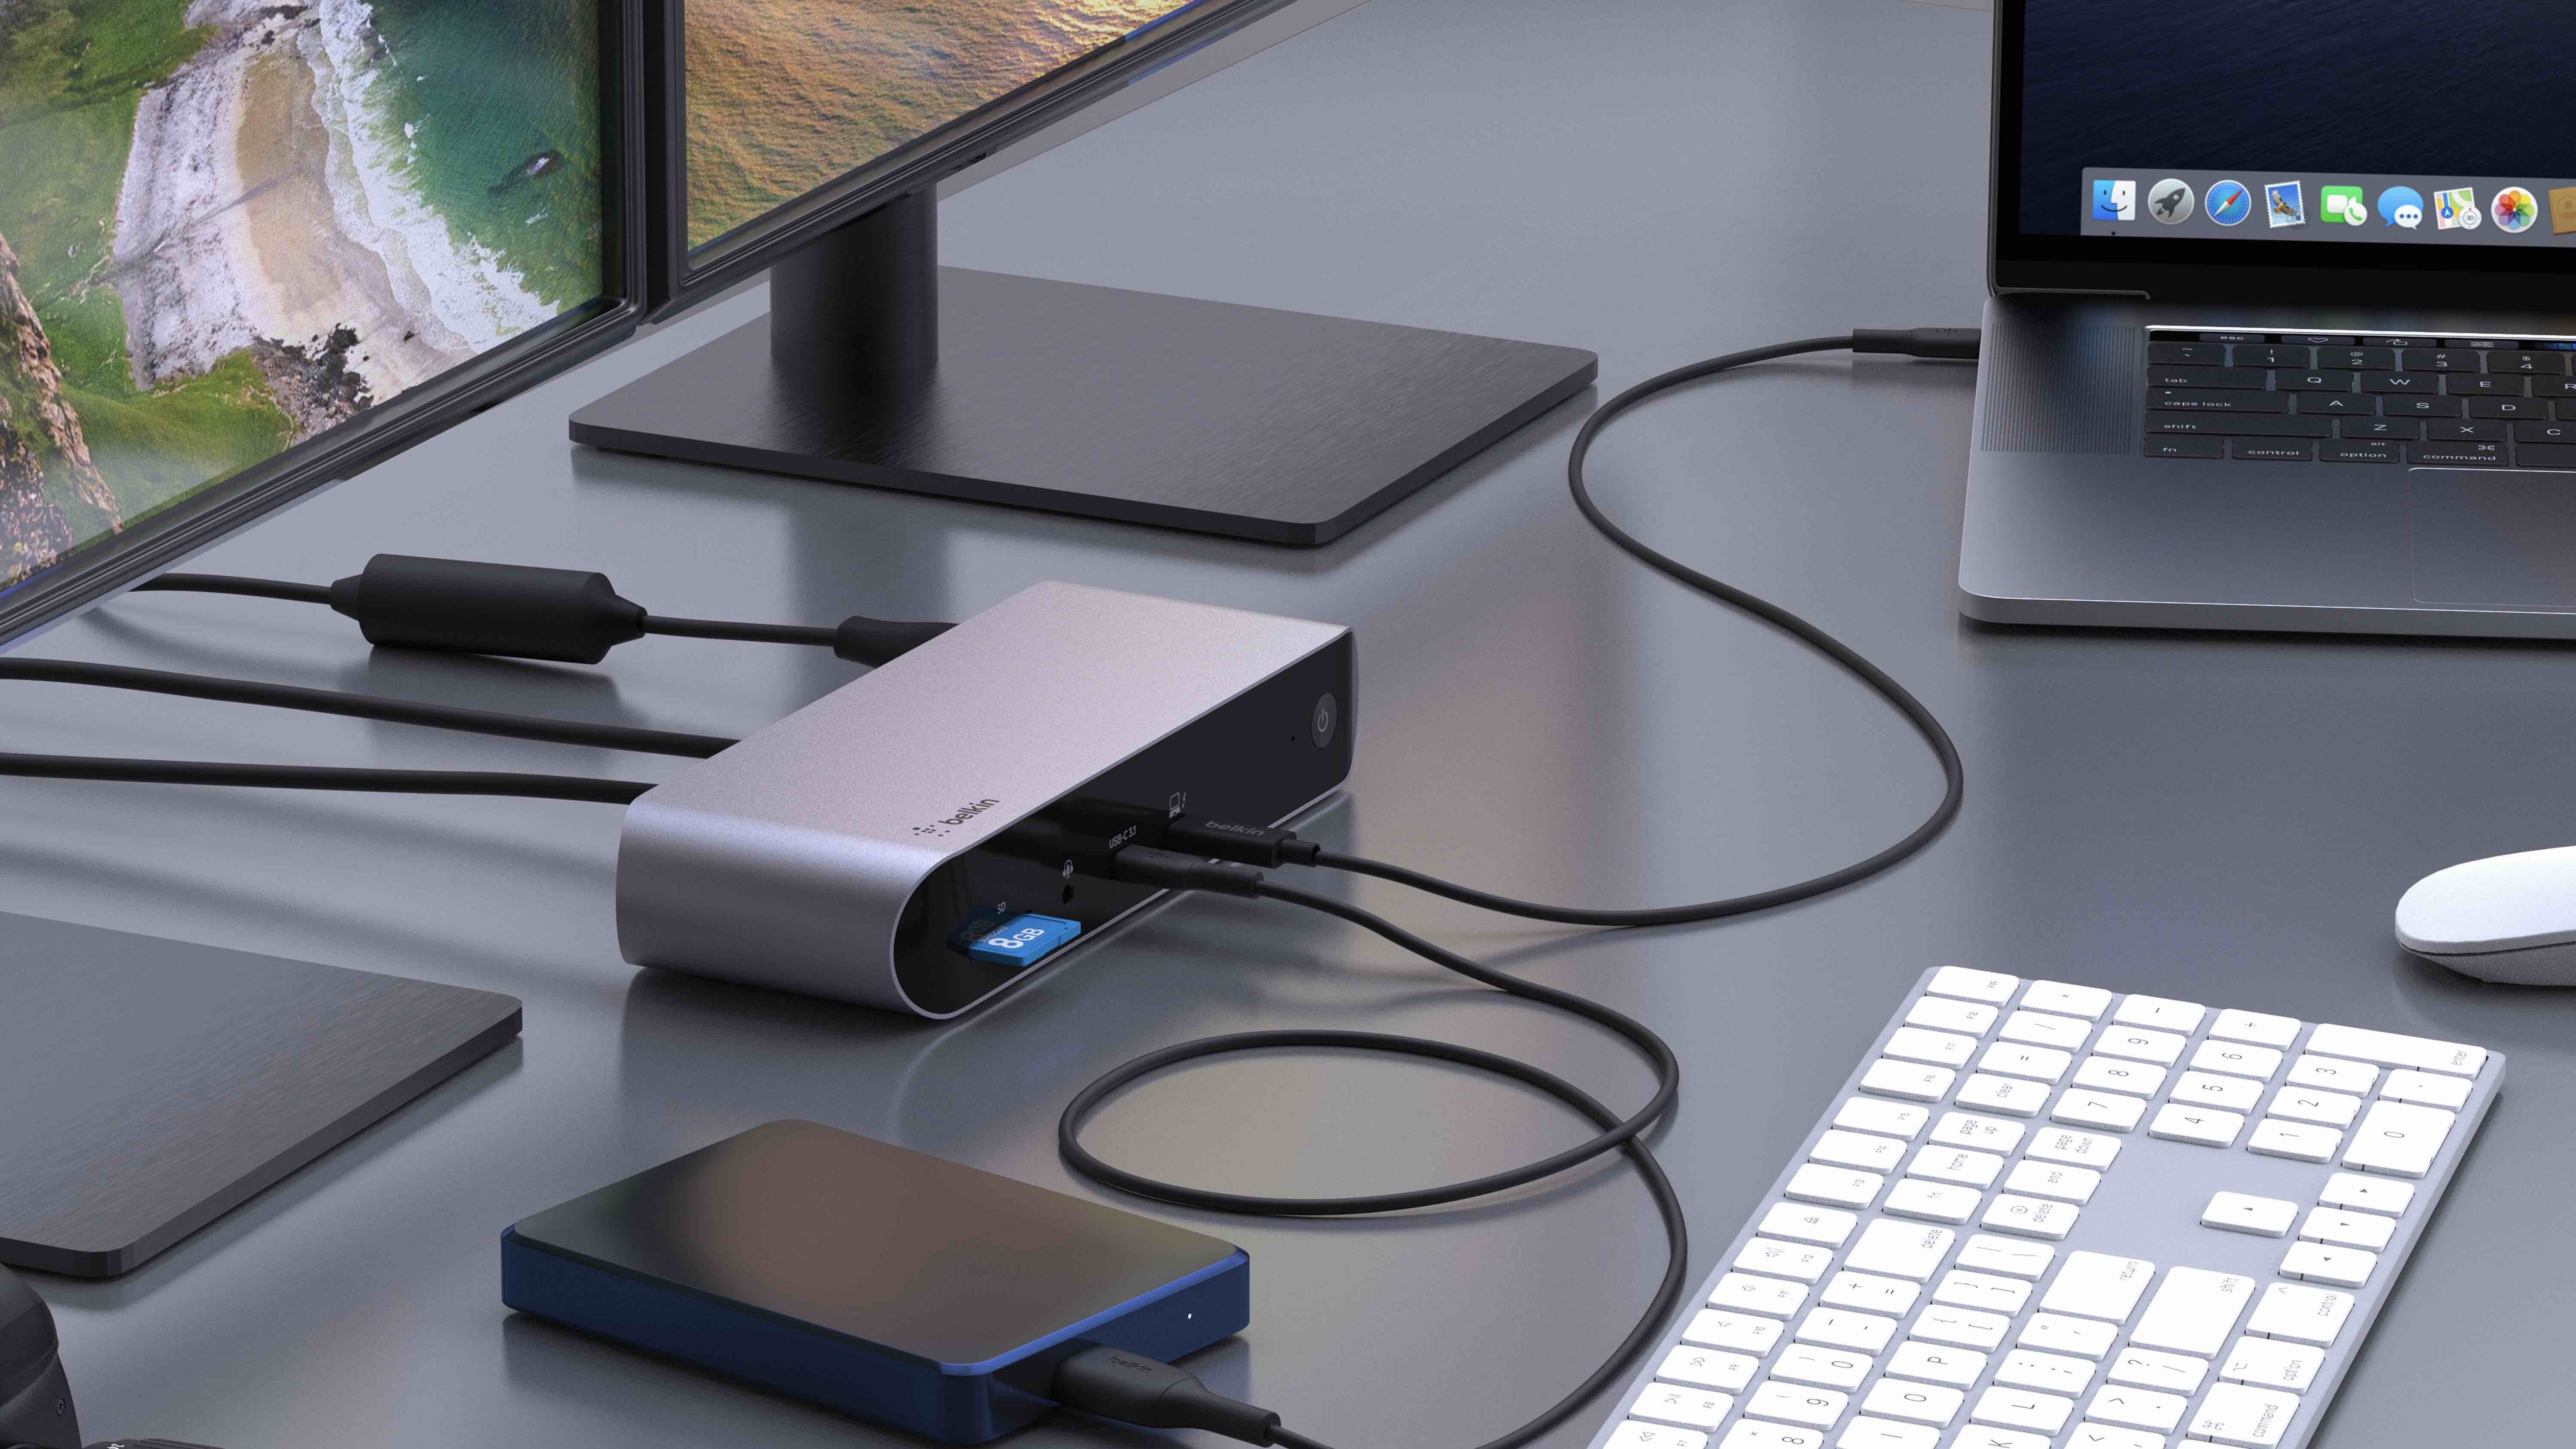 Belkin Thunderbolt 3 Dock Mini - USB-C Docking Station For Mac